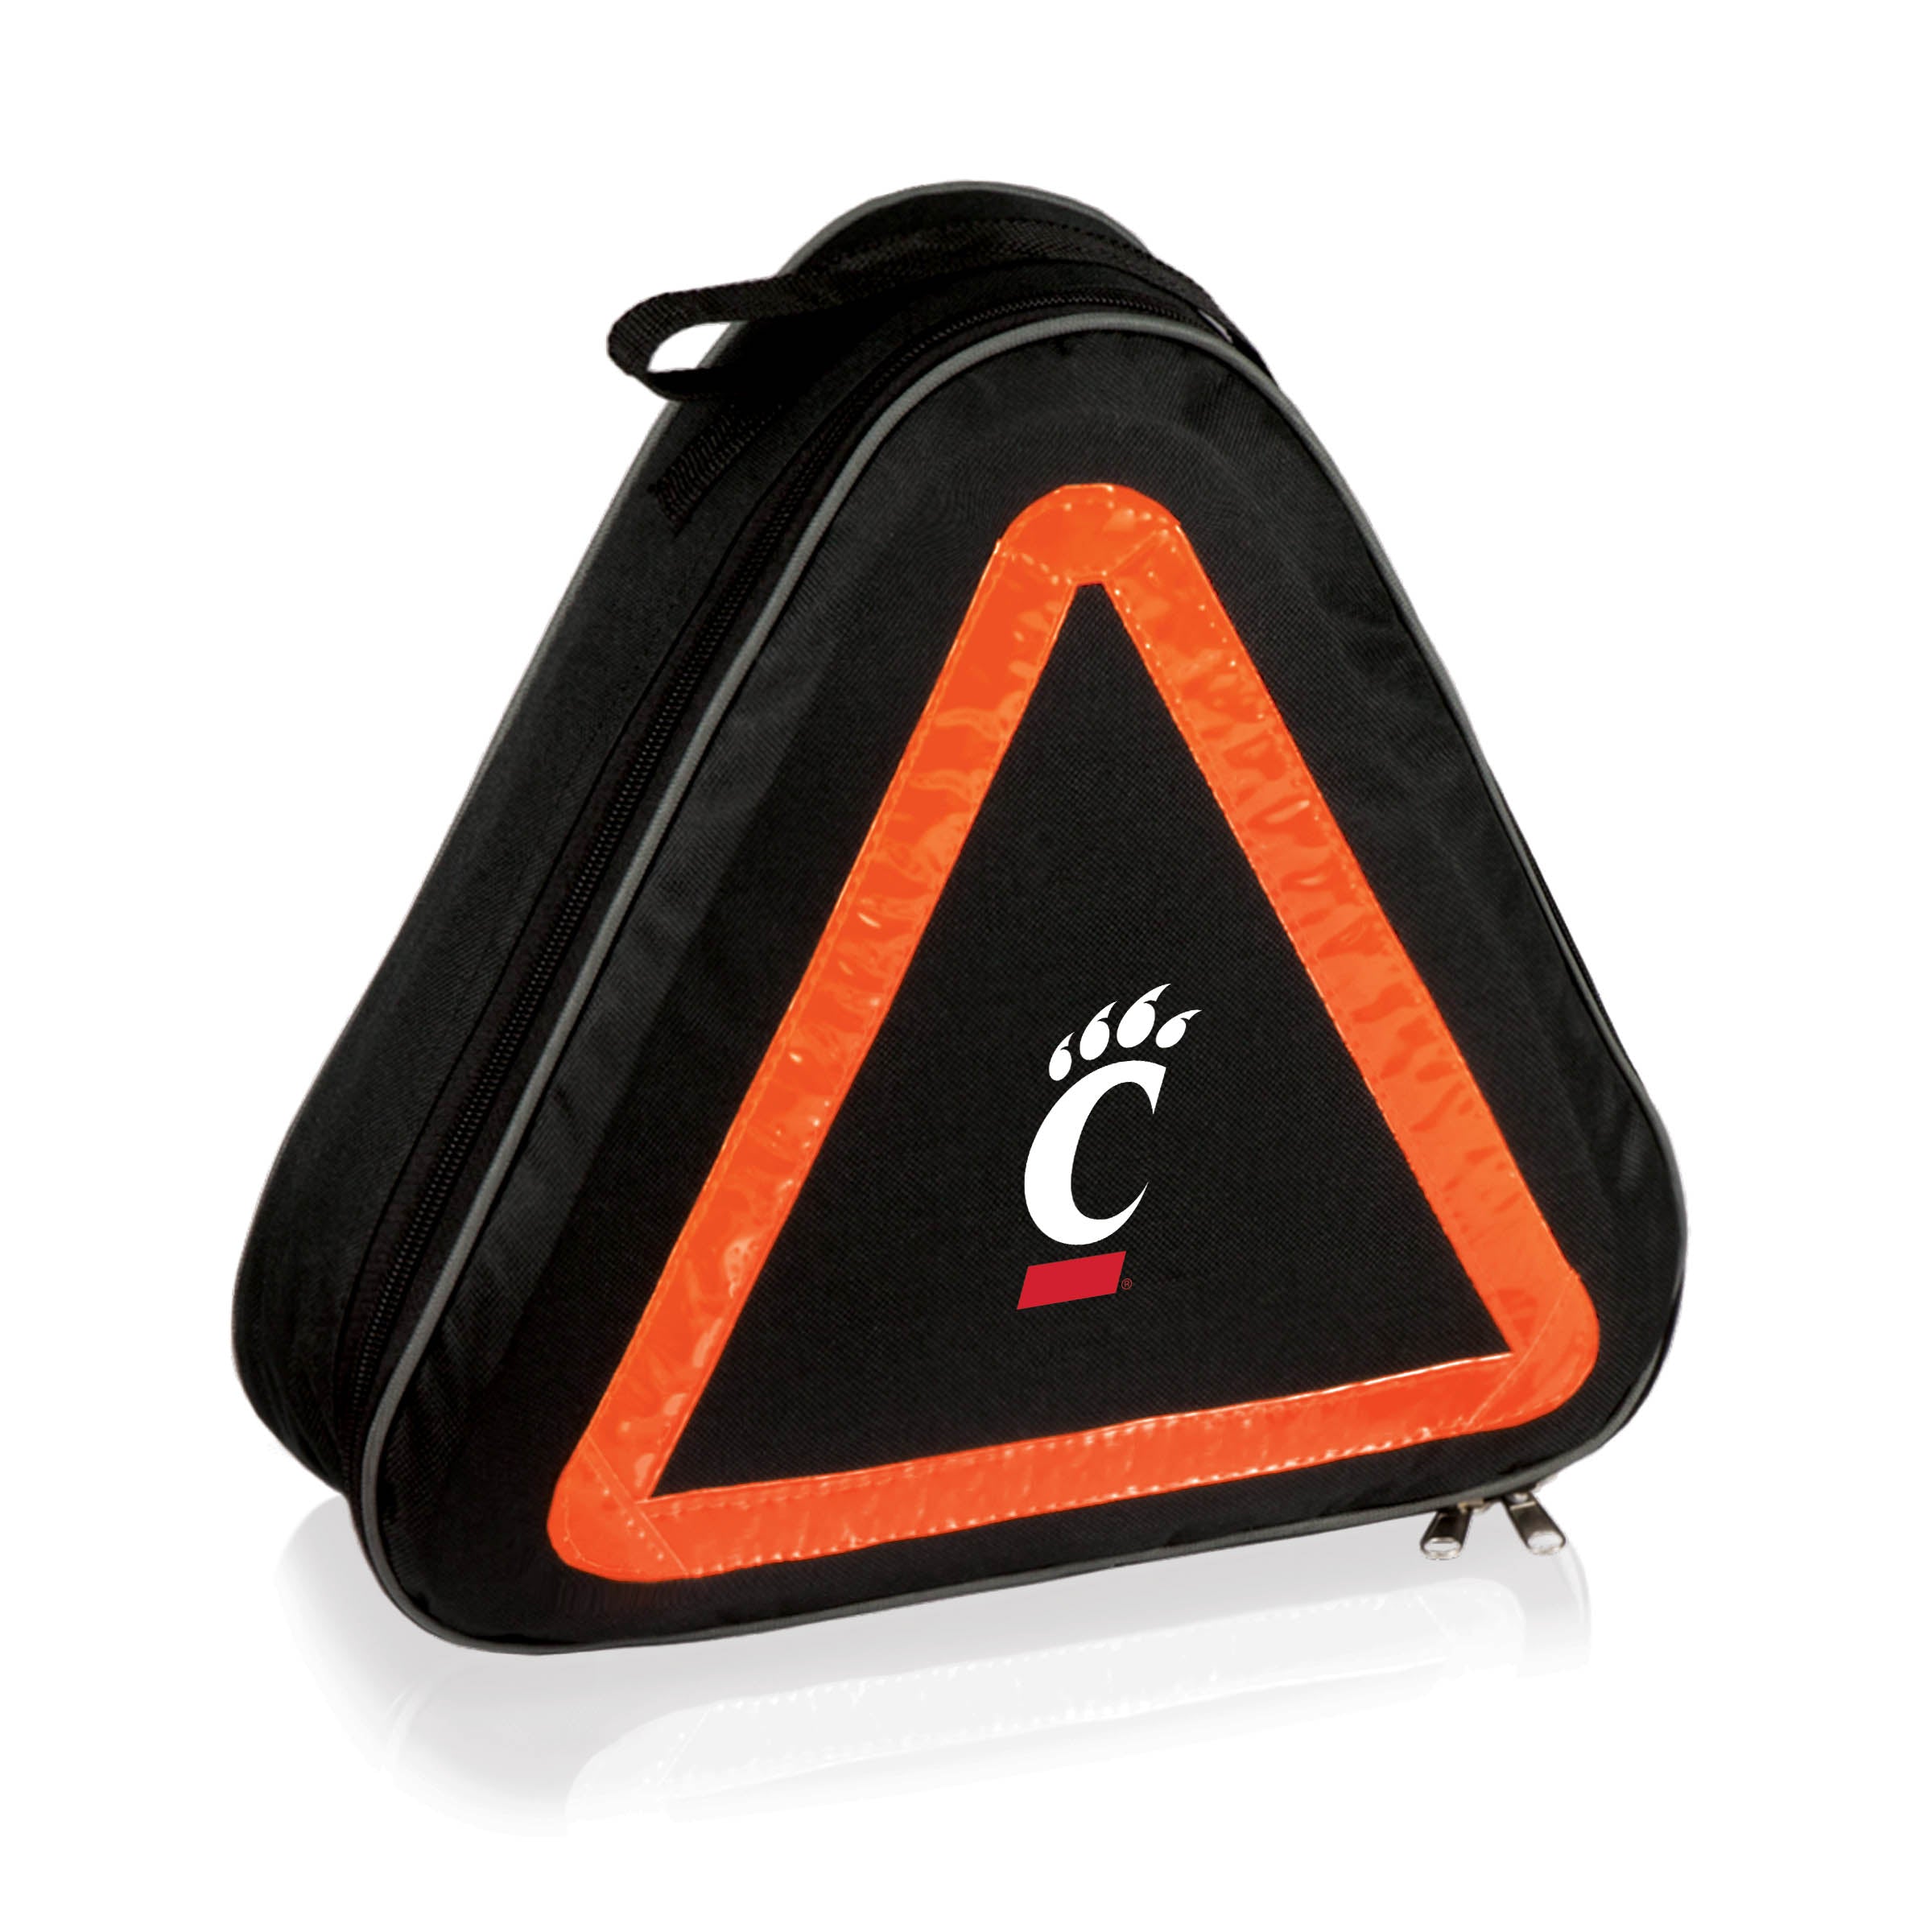 Cincinnati Bearcats - Roadside Emergency Car Kit